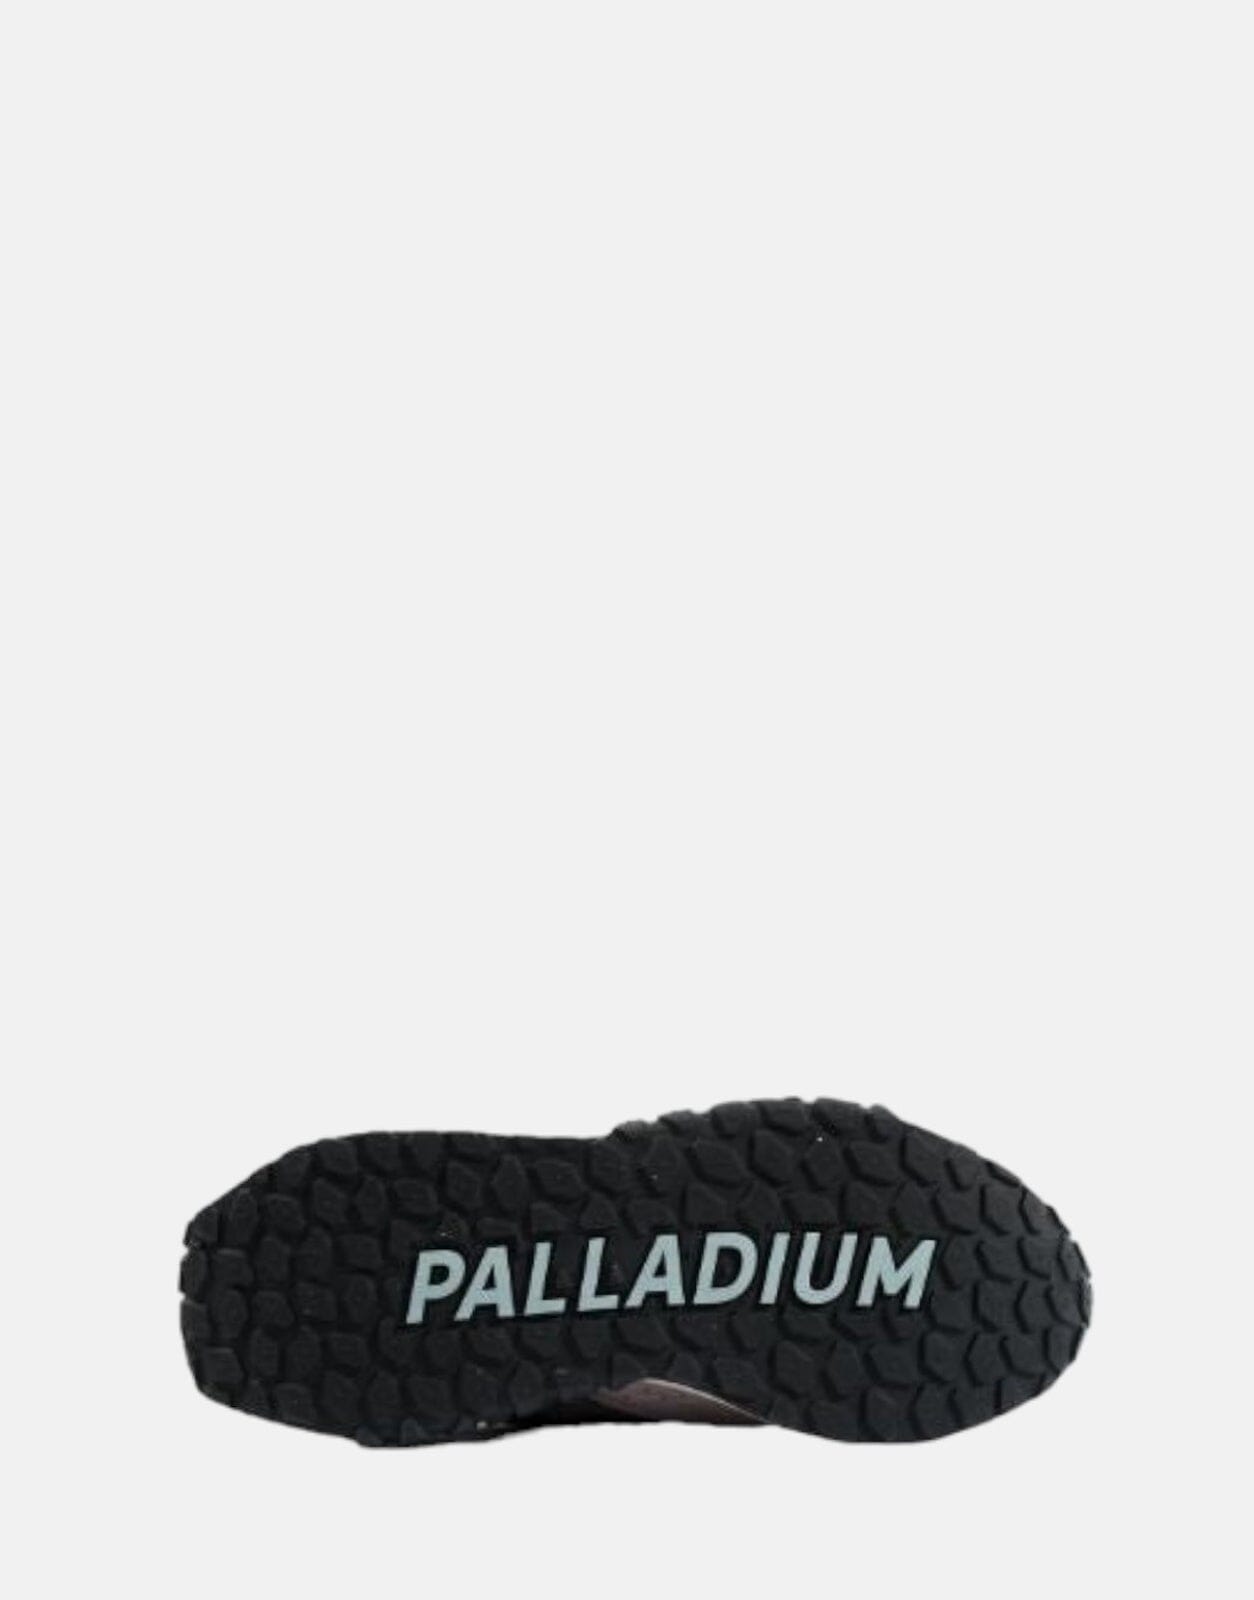 Palladium Troop Runner Outcity Vapor Sneakers - Subwear